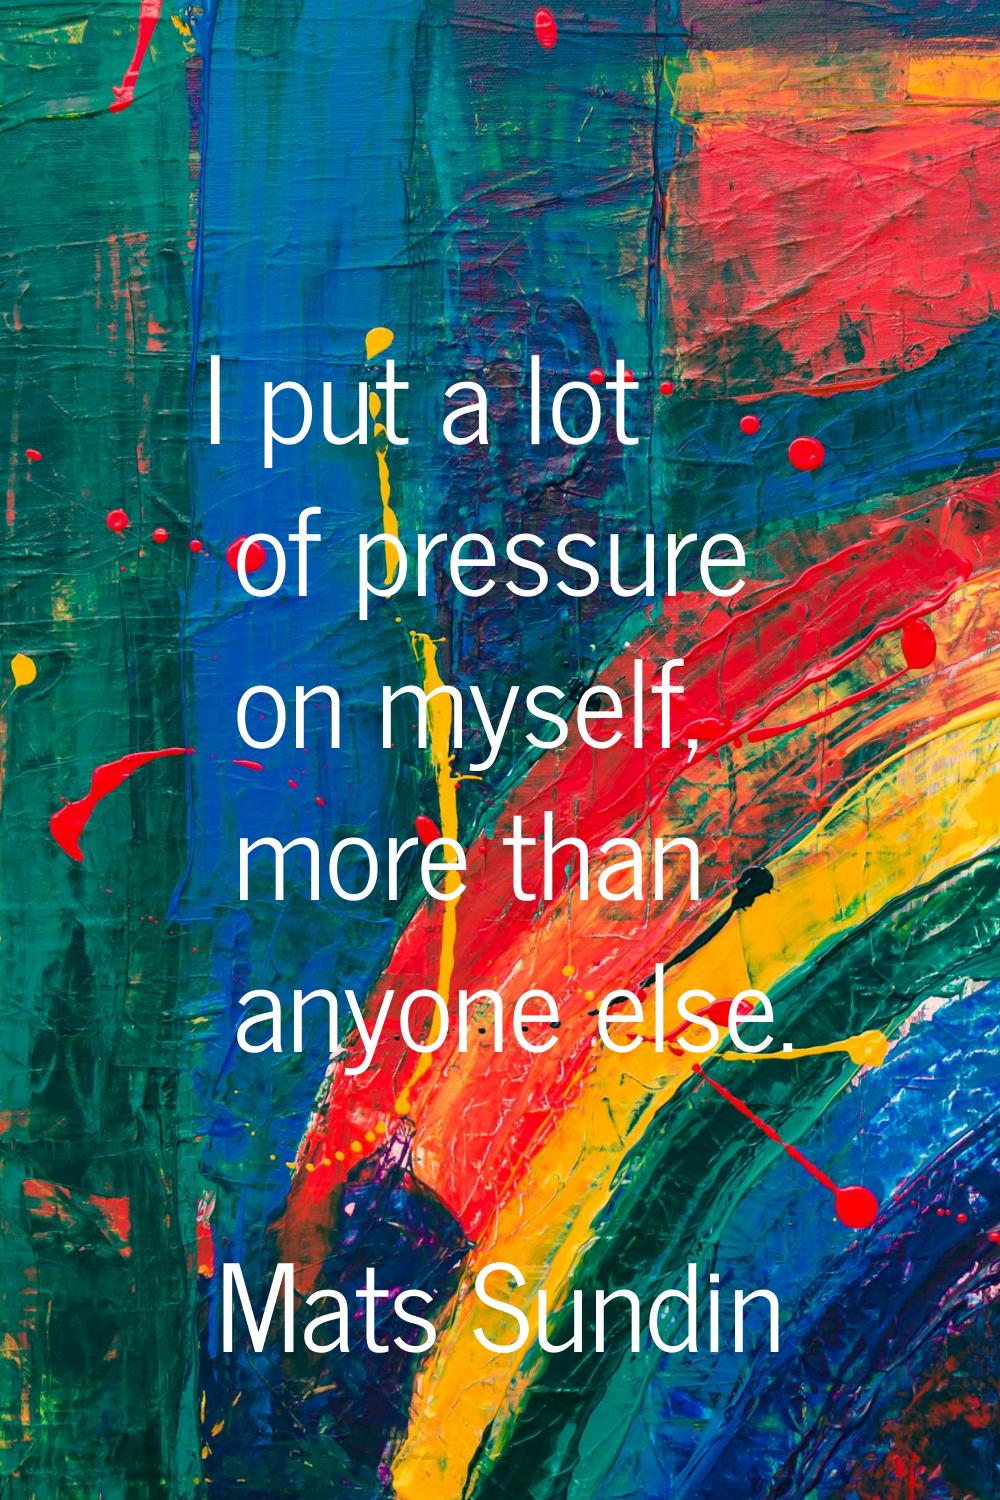 I put a lot of pressure on myself, more than anyone else.